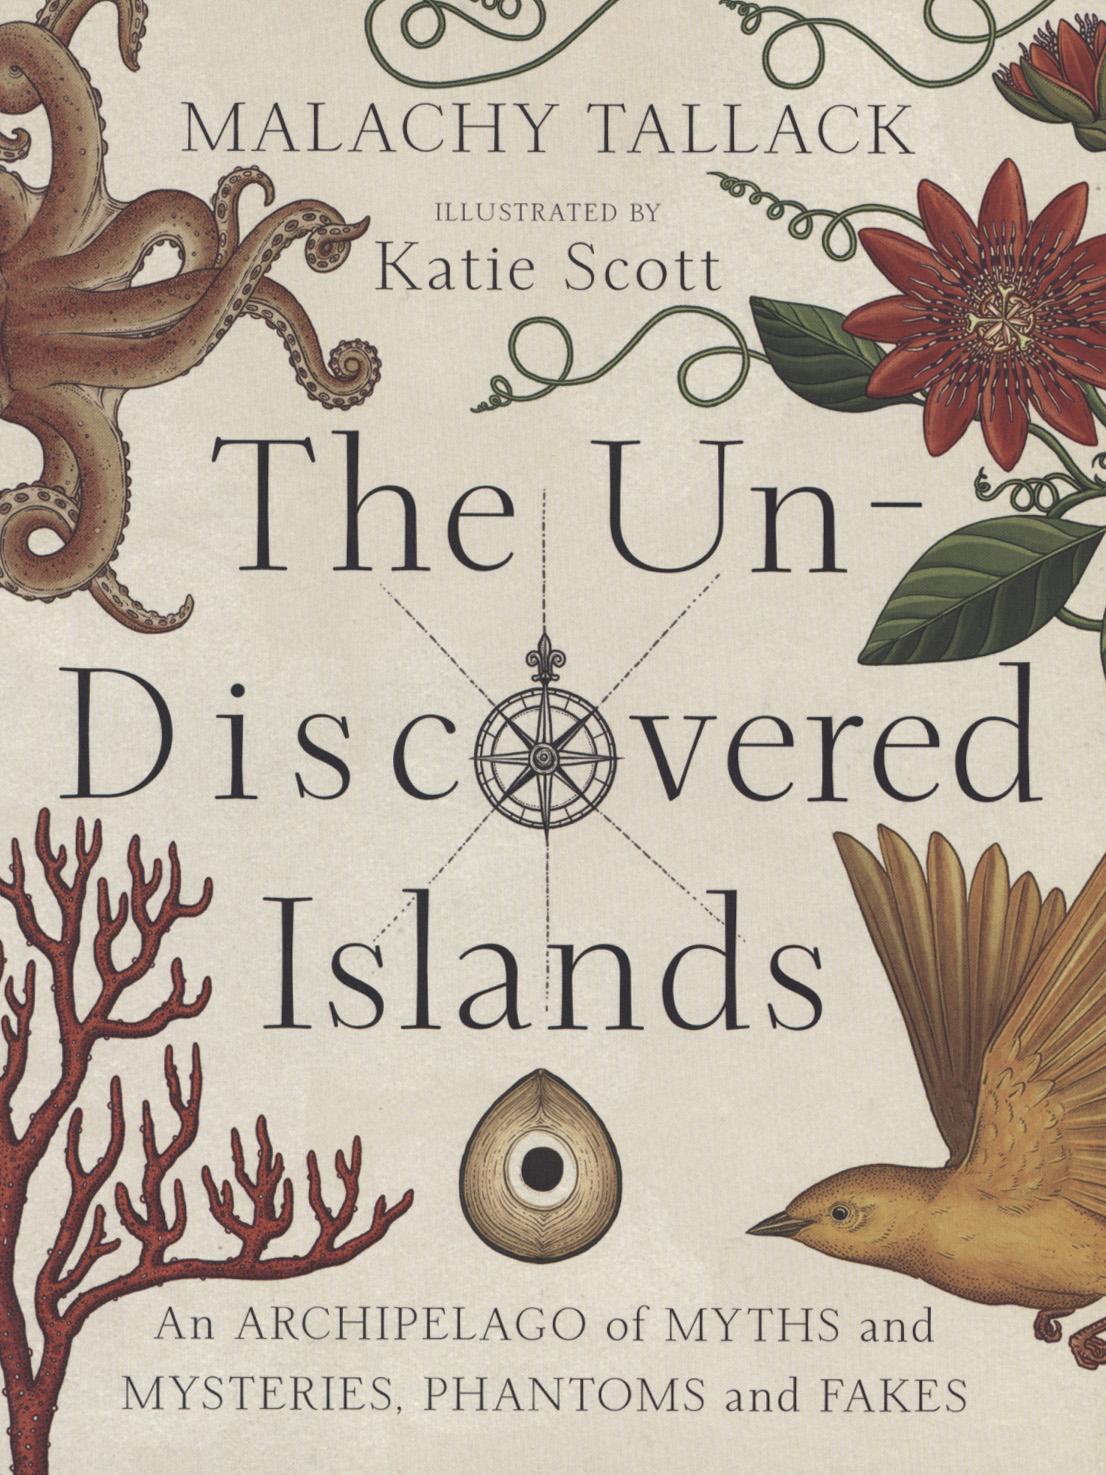 Un-Discovered Islands